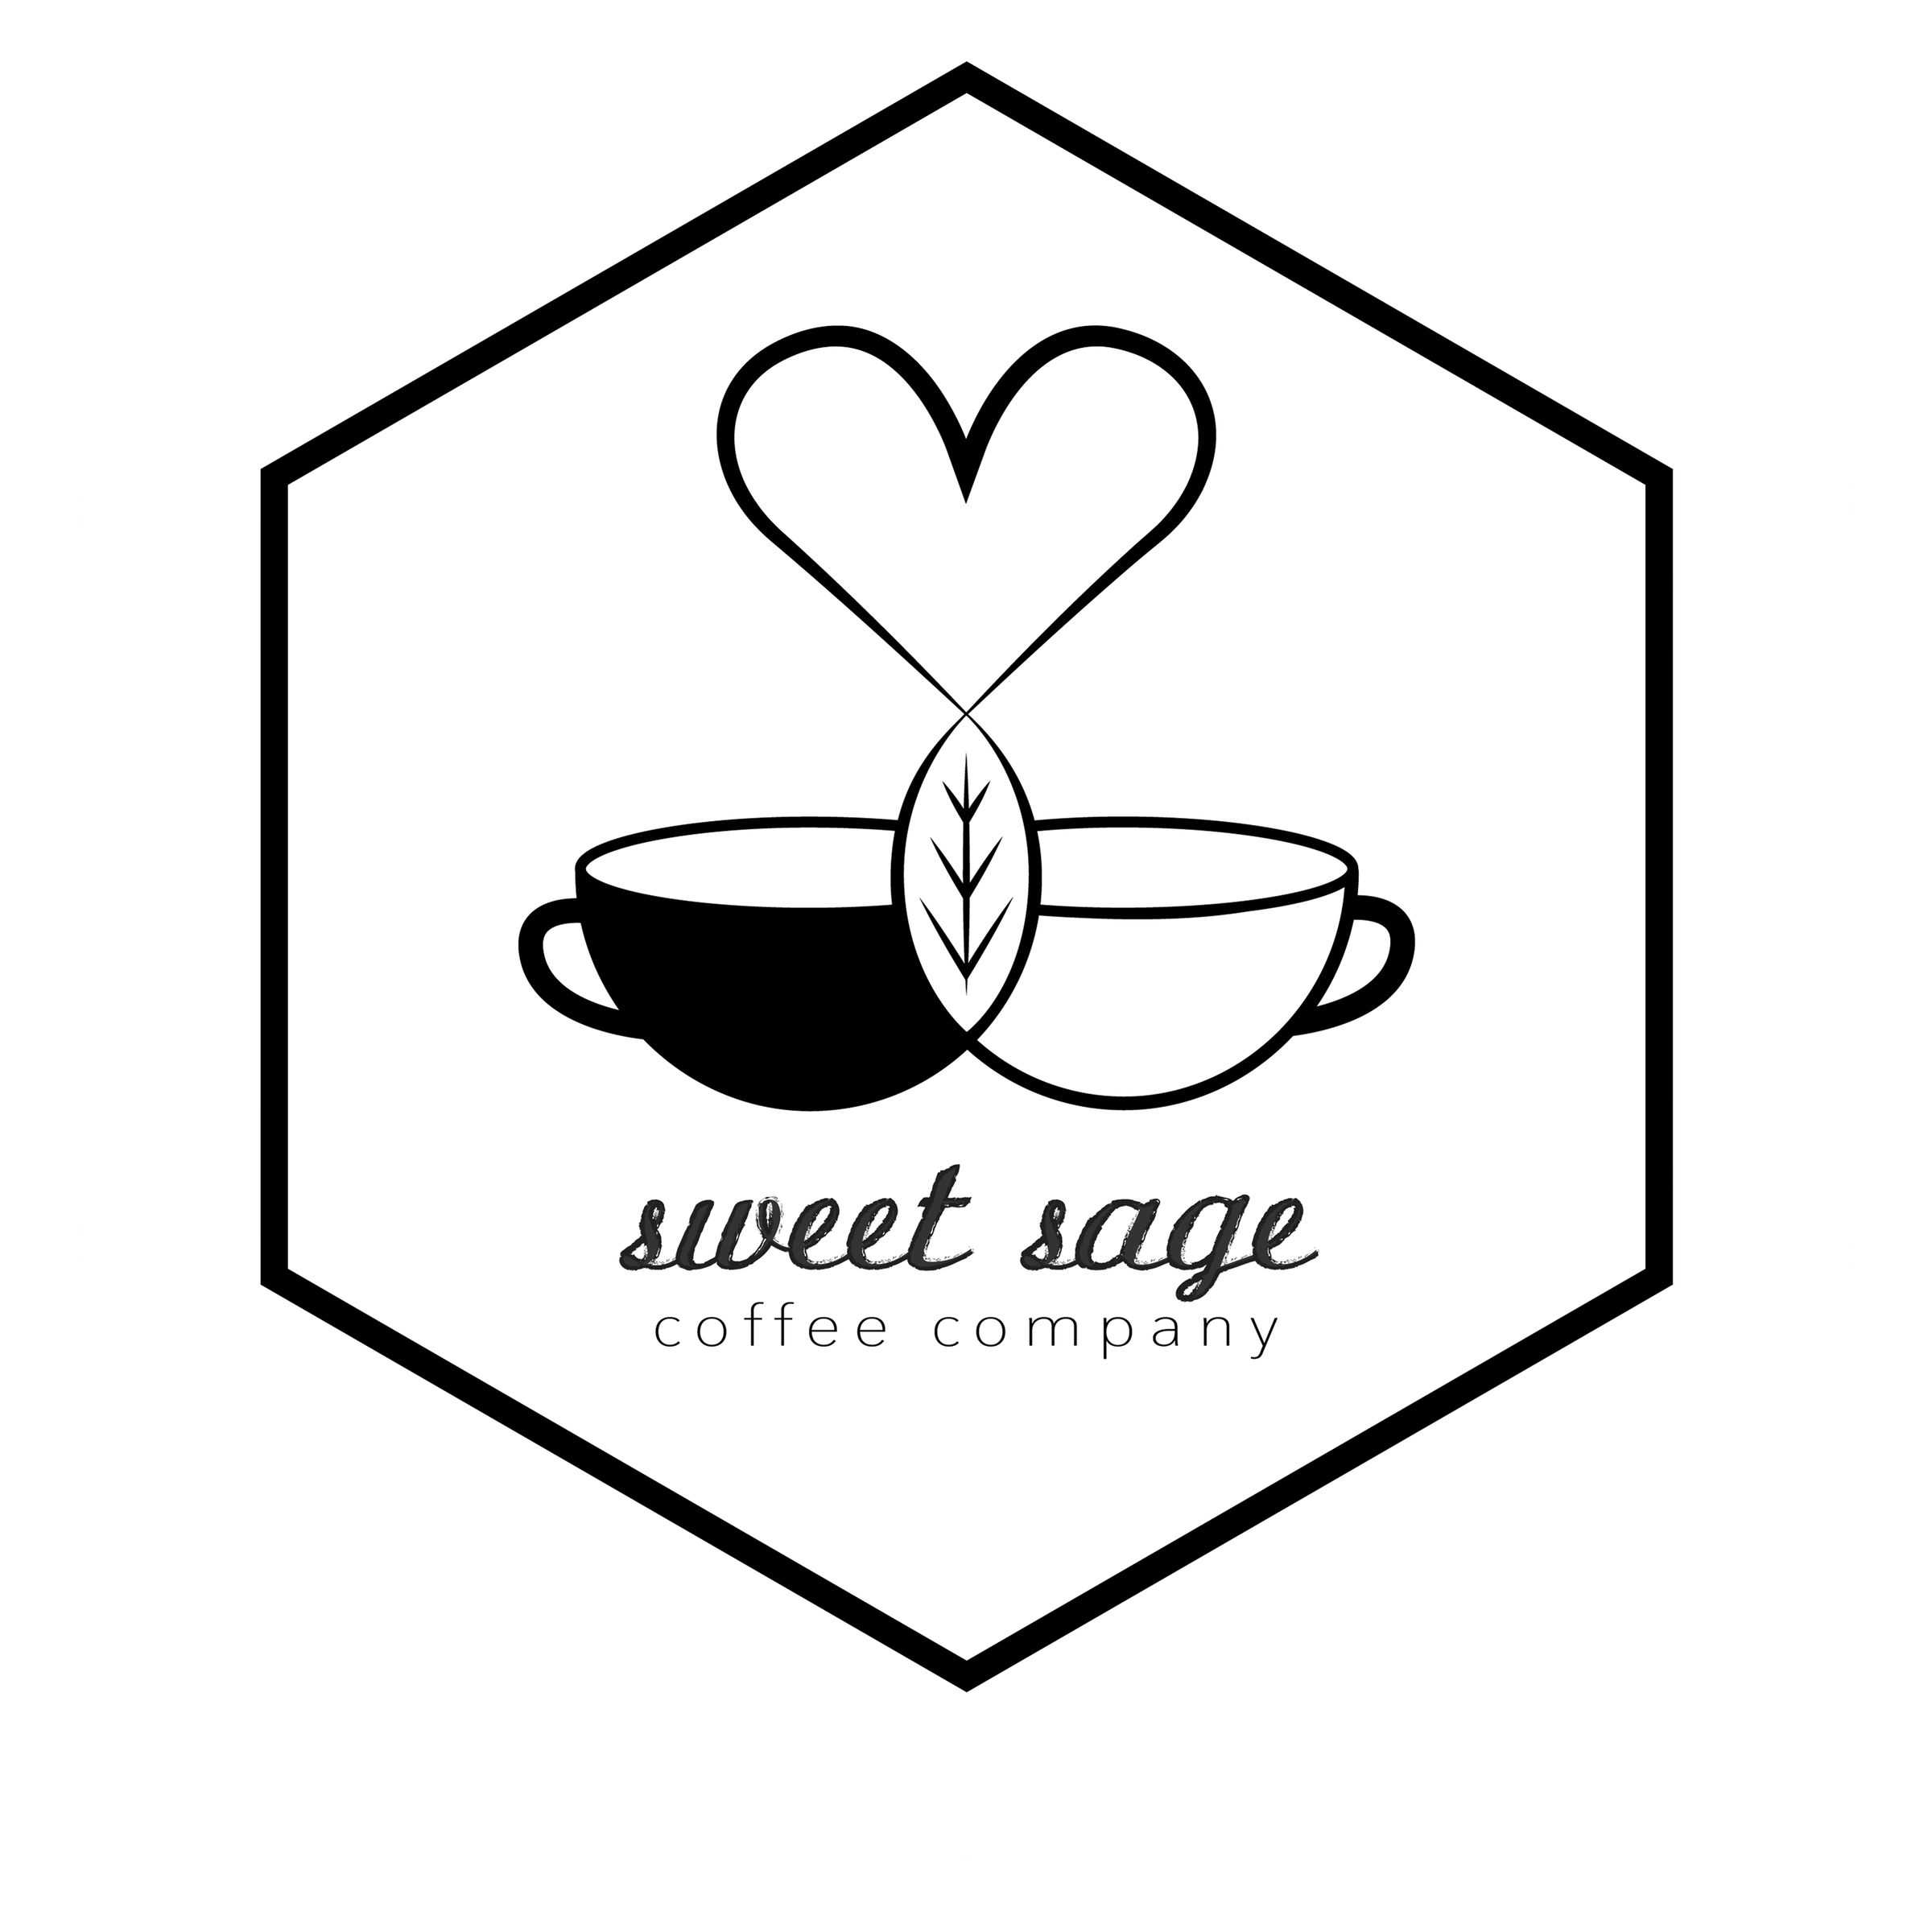 Sweet Sage Coffee Co. logo